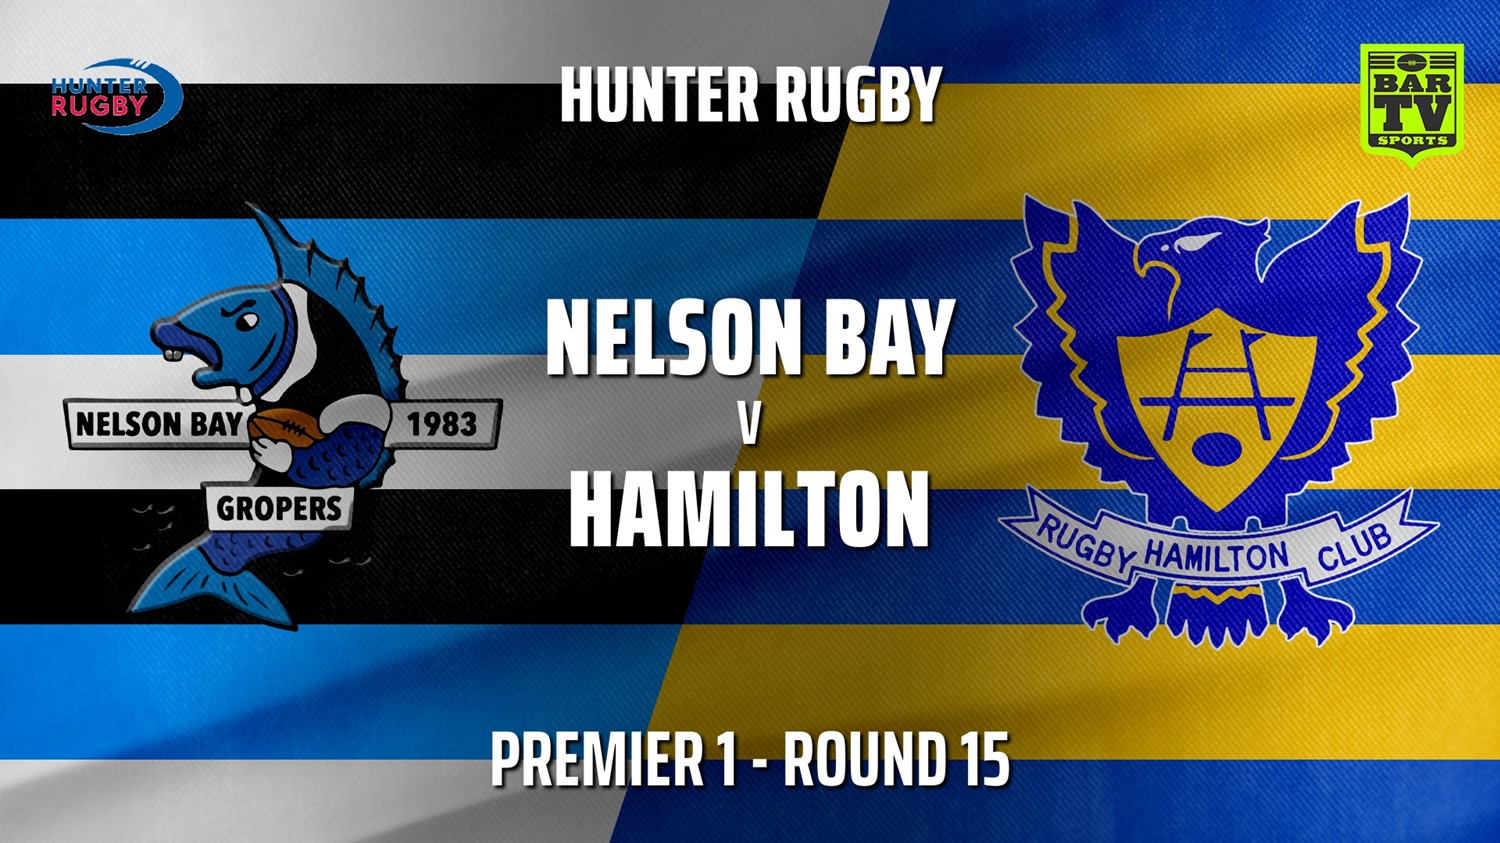 210731-Hunter Rugby Round 15 - Premier 1 - Nelson Bay Gropers v Hamilton Hawks Slate Image